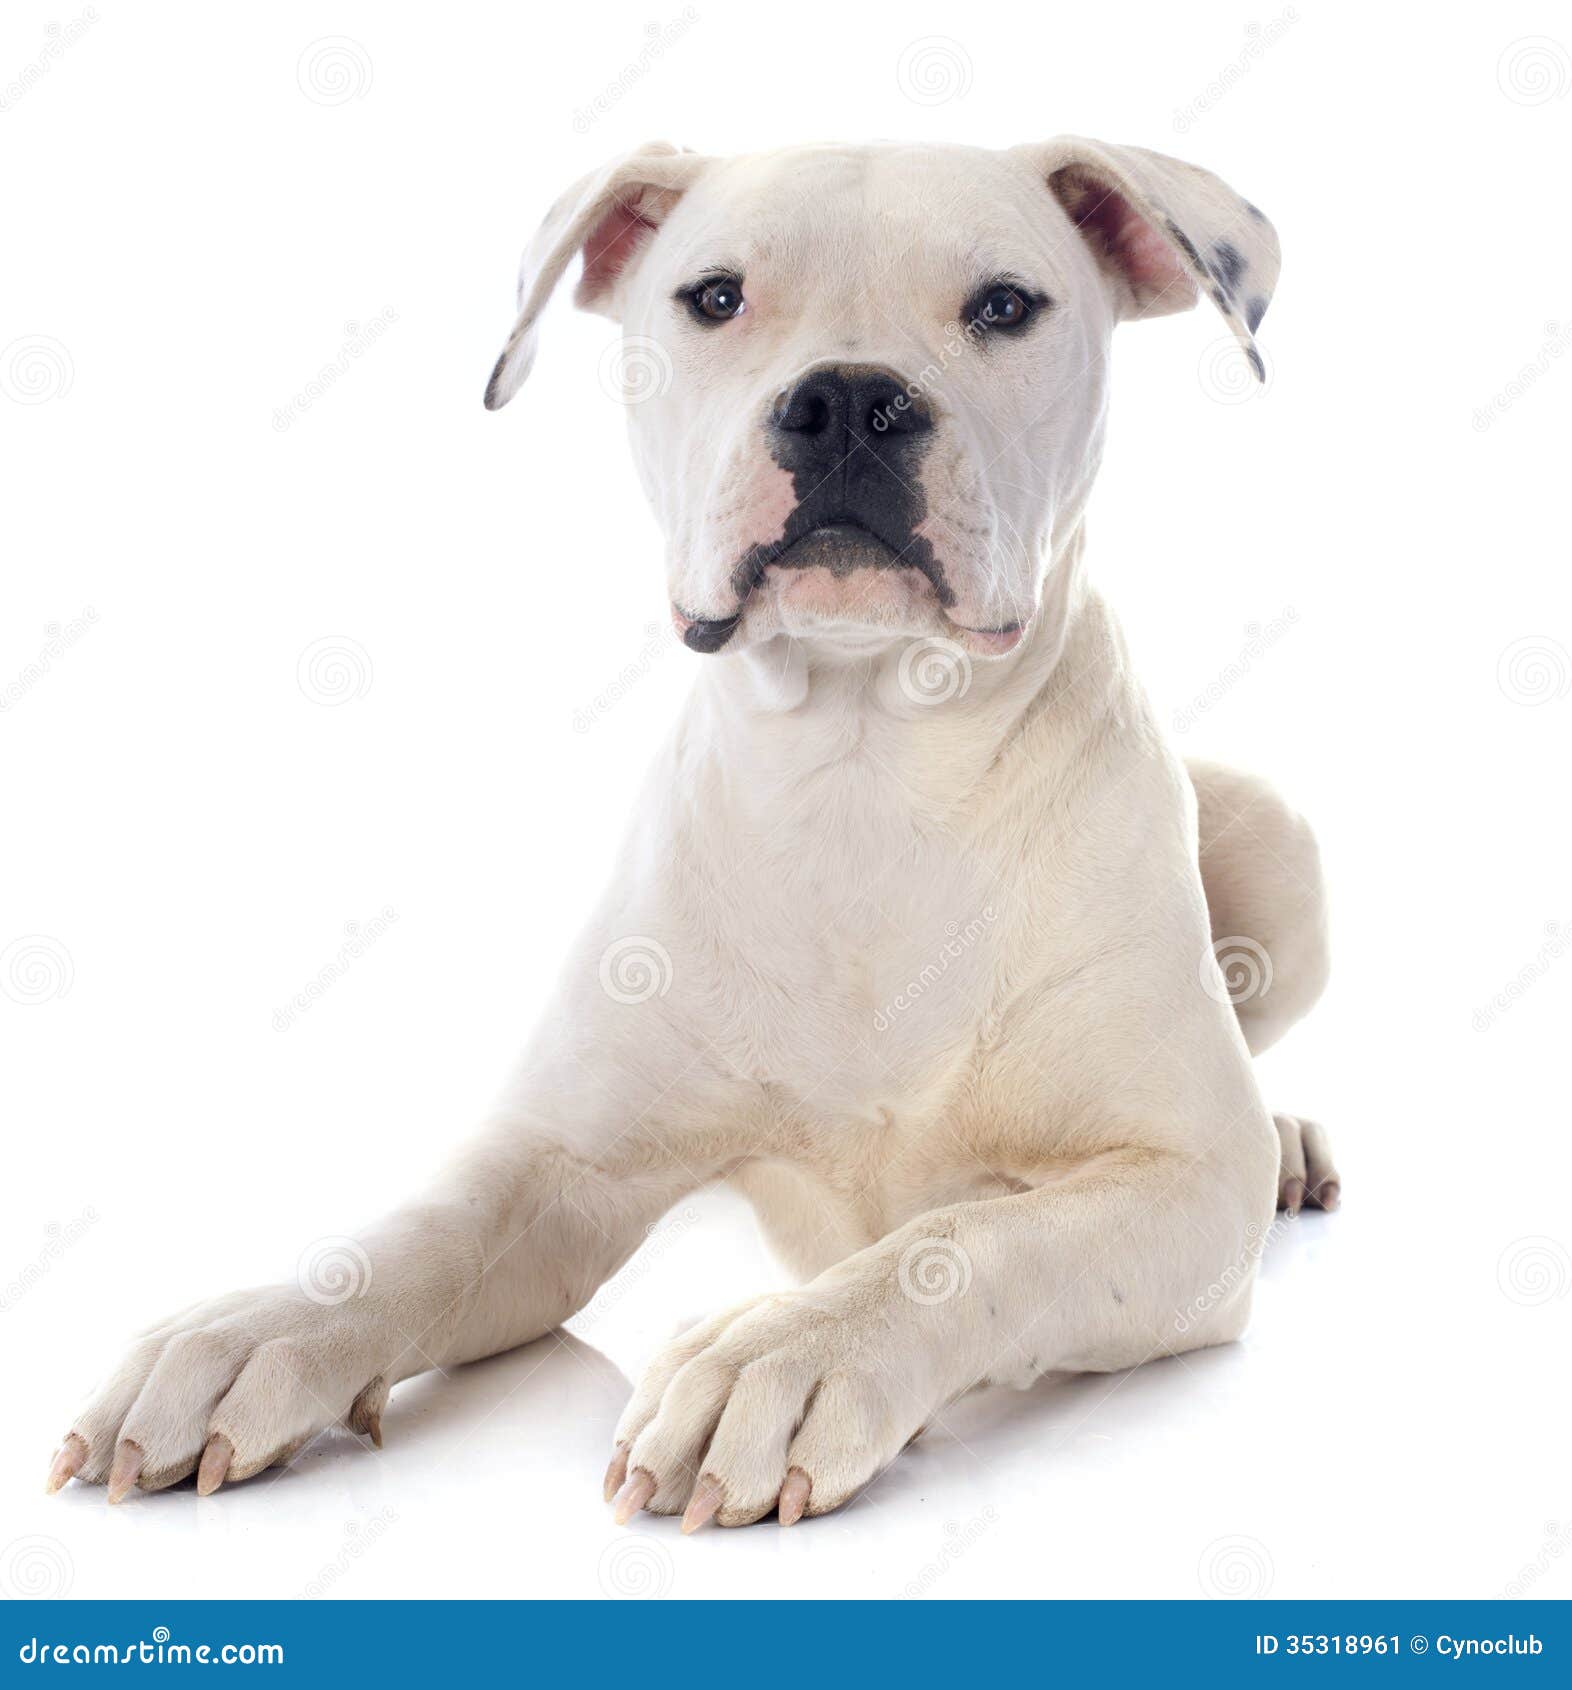 Puppy American Bulldog Stock Image - Image: 35318961